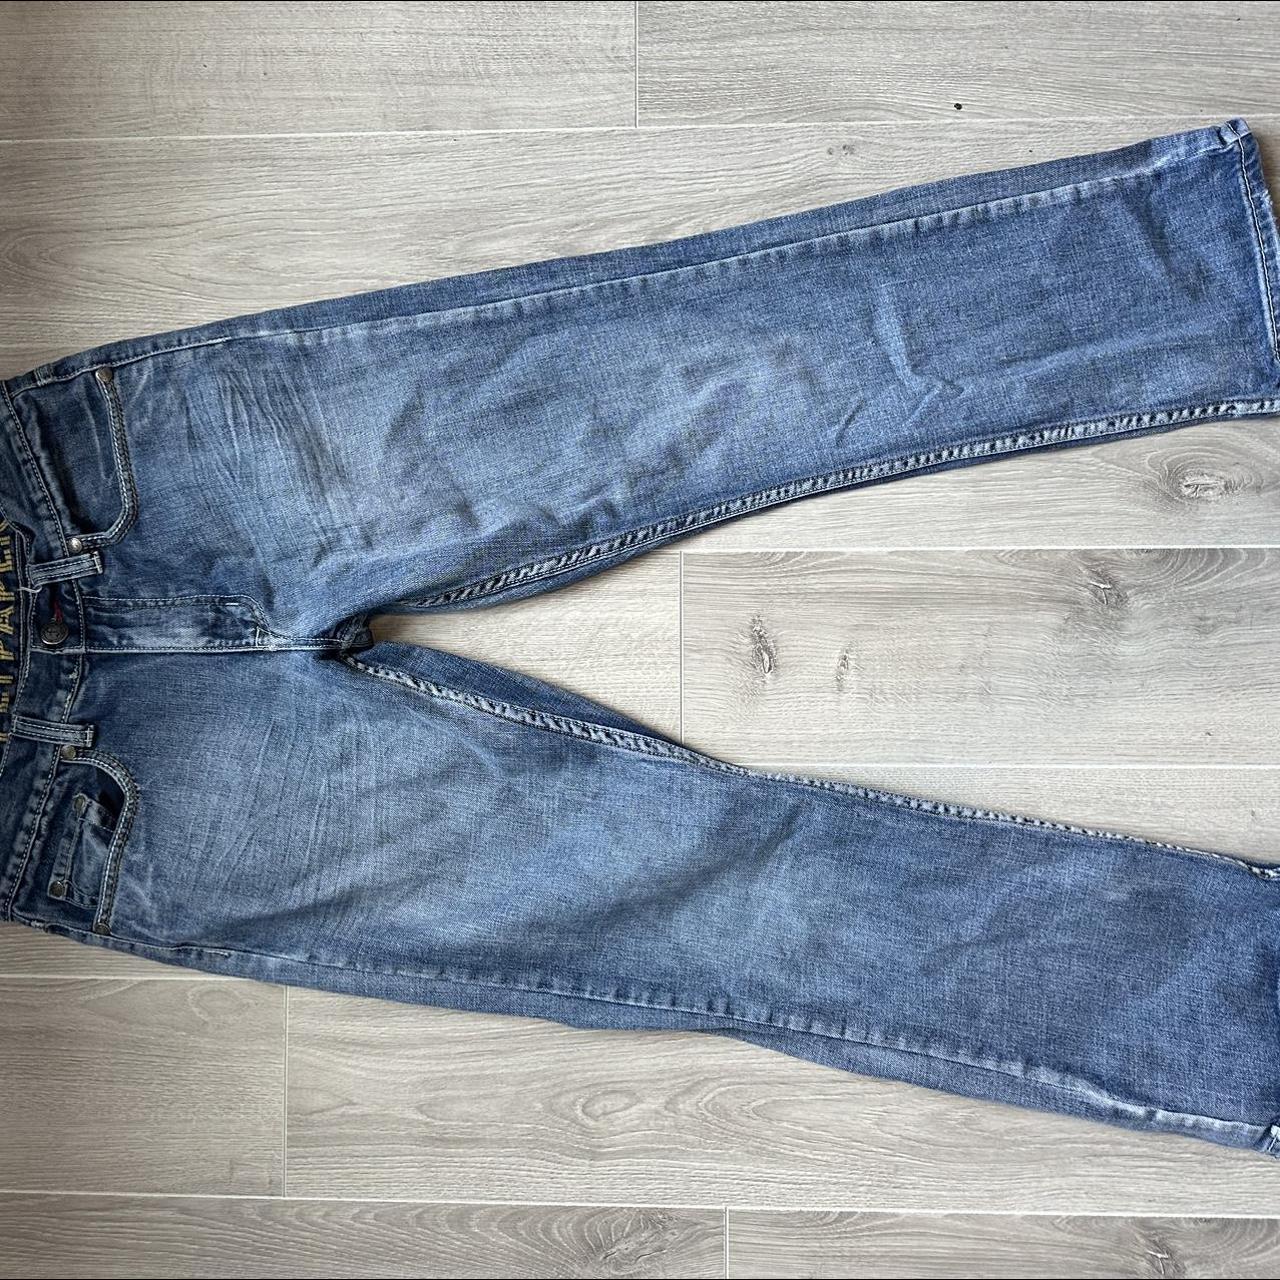 Flypaper Jeans 30x30 - Depop